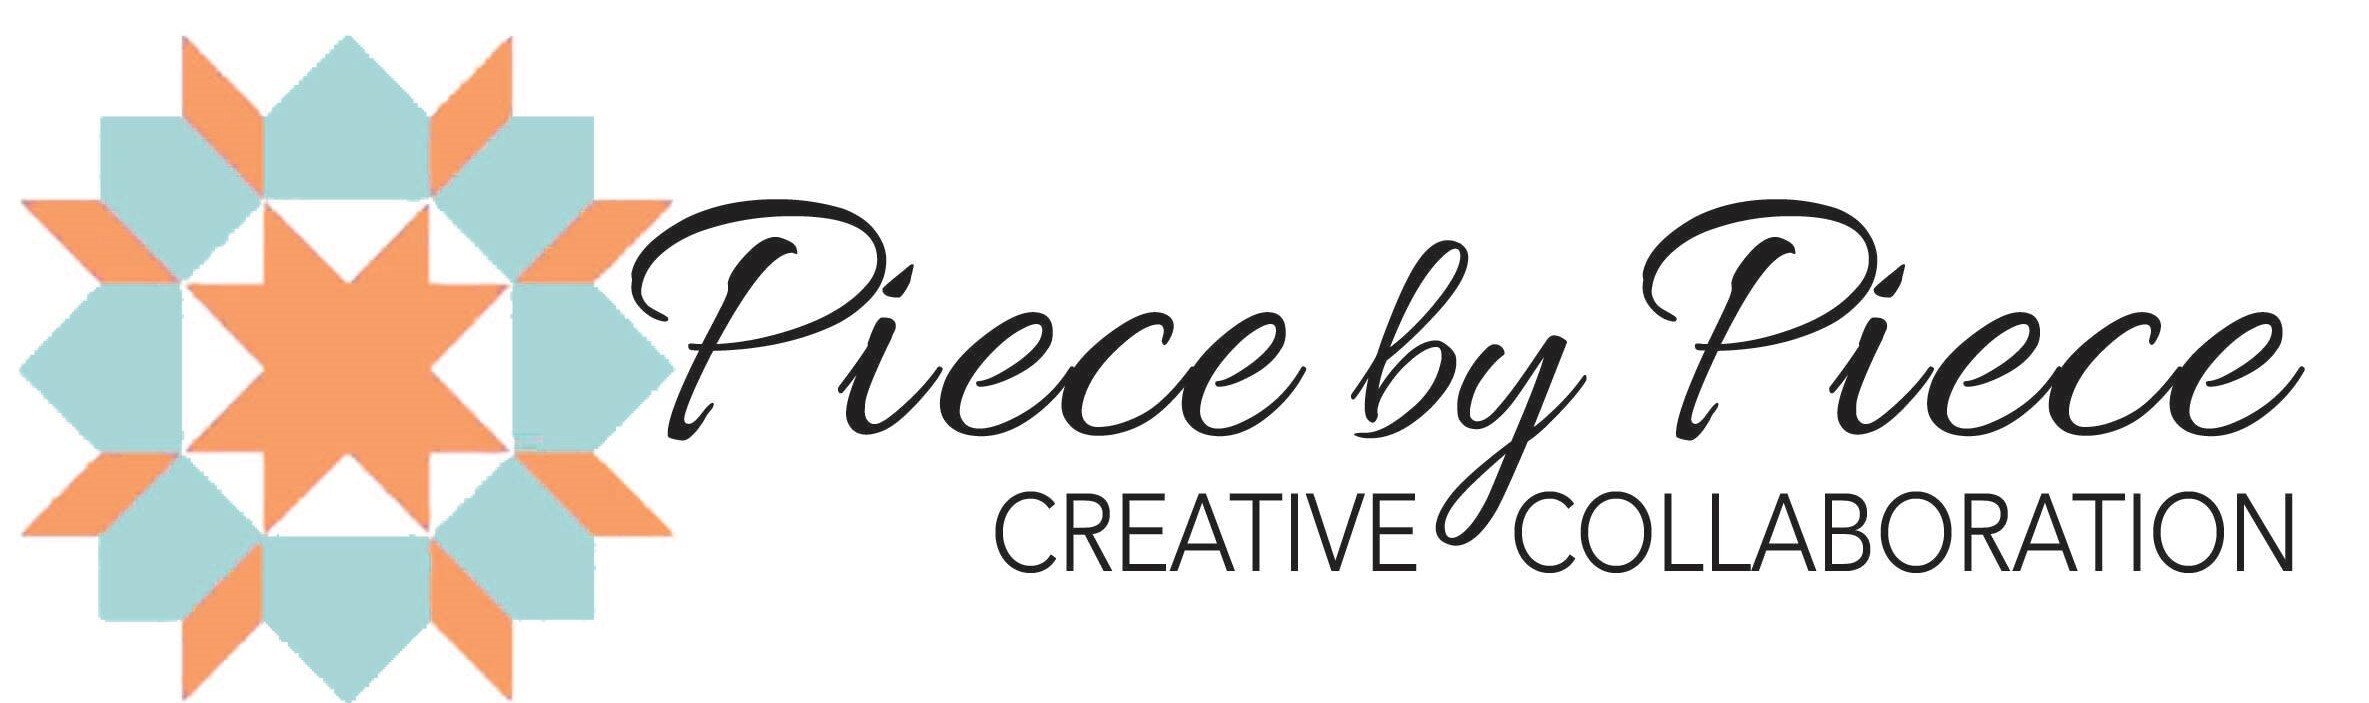 Piece by Piece Creative Collaboration